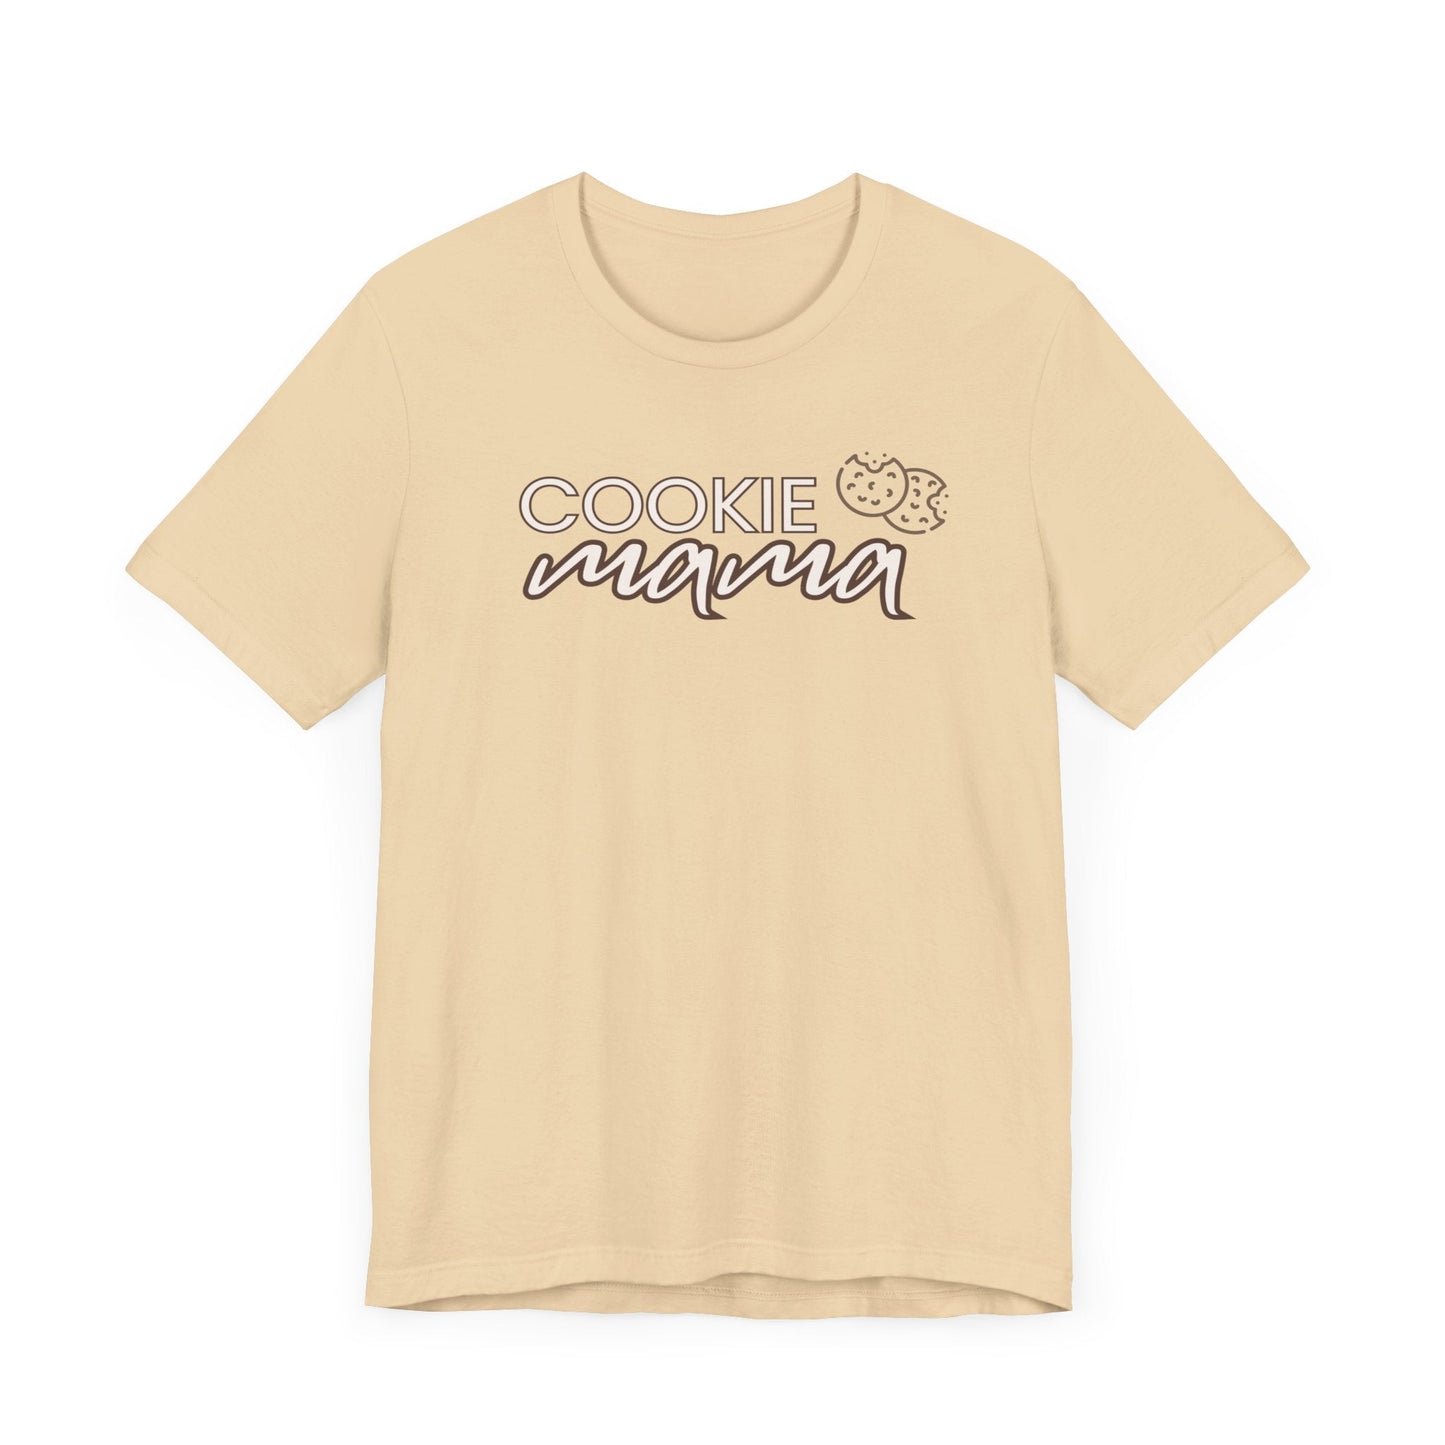 Cookie MAMA T-shirt - Mega-licious Cookie Co.